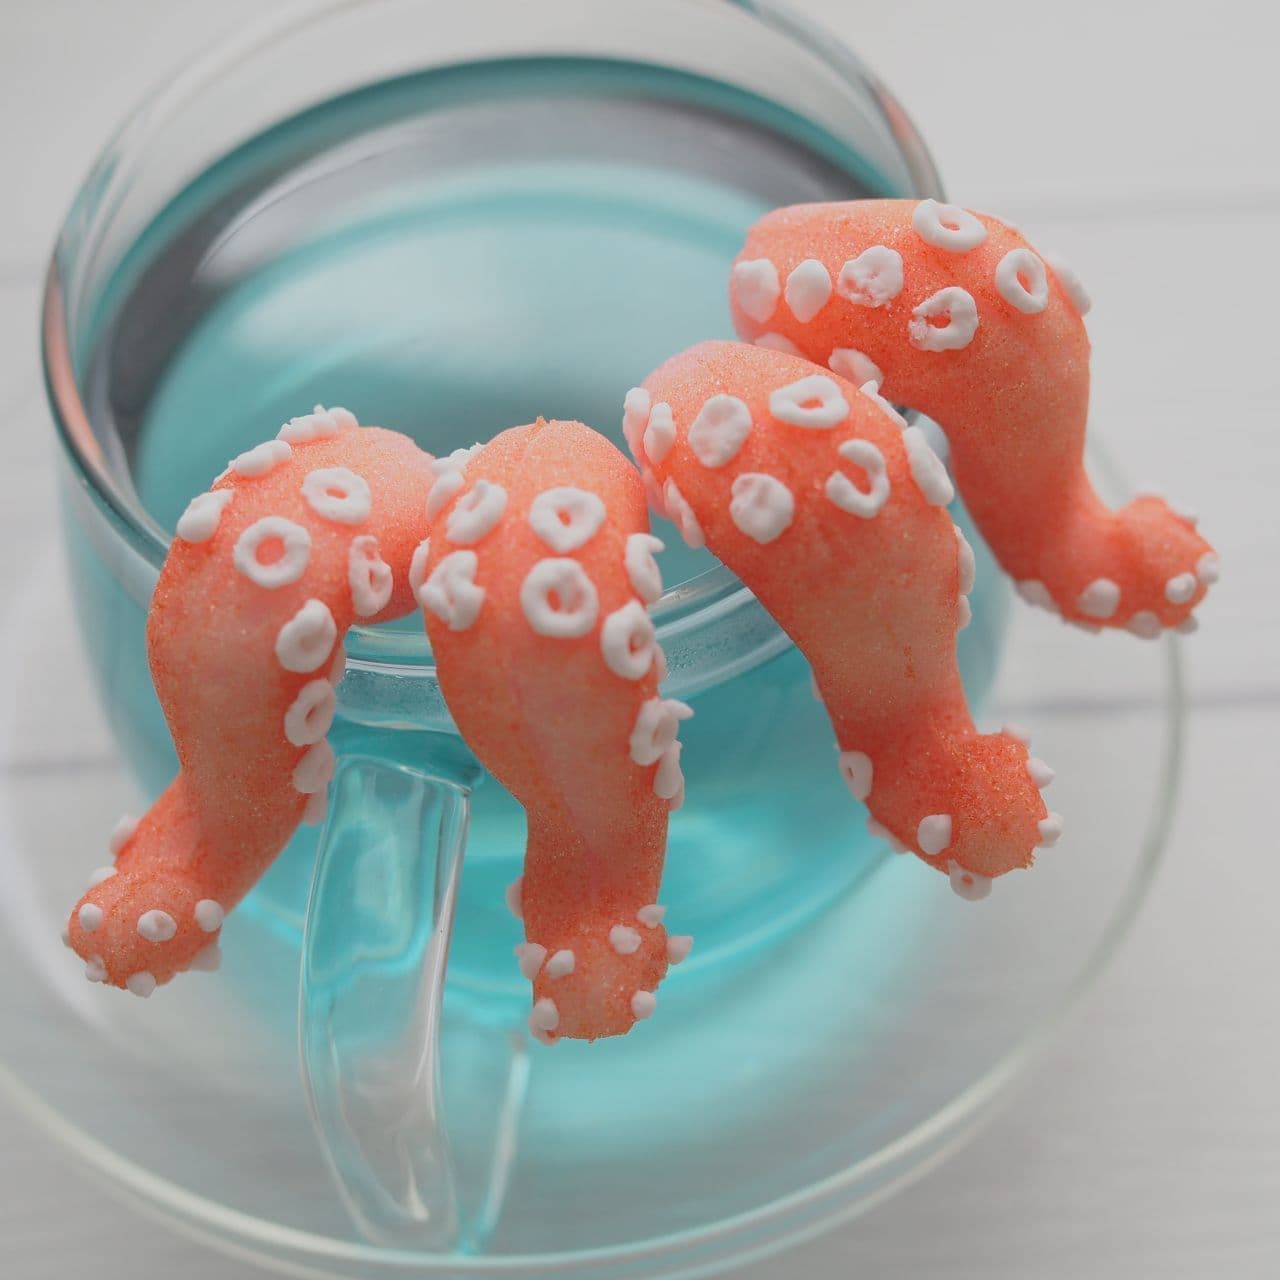 Animal sugar "Octopus foot sugar"